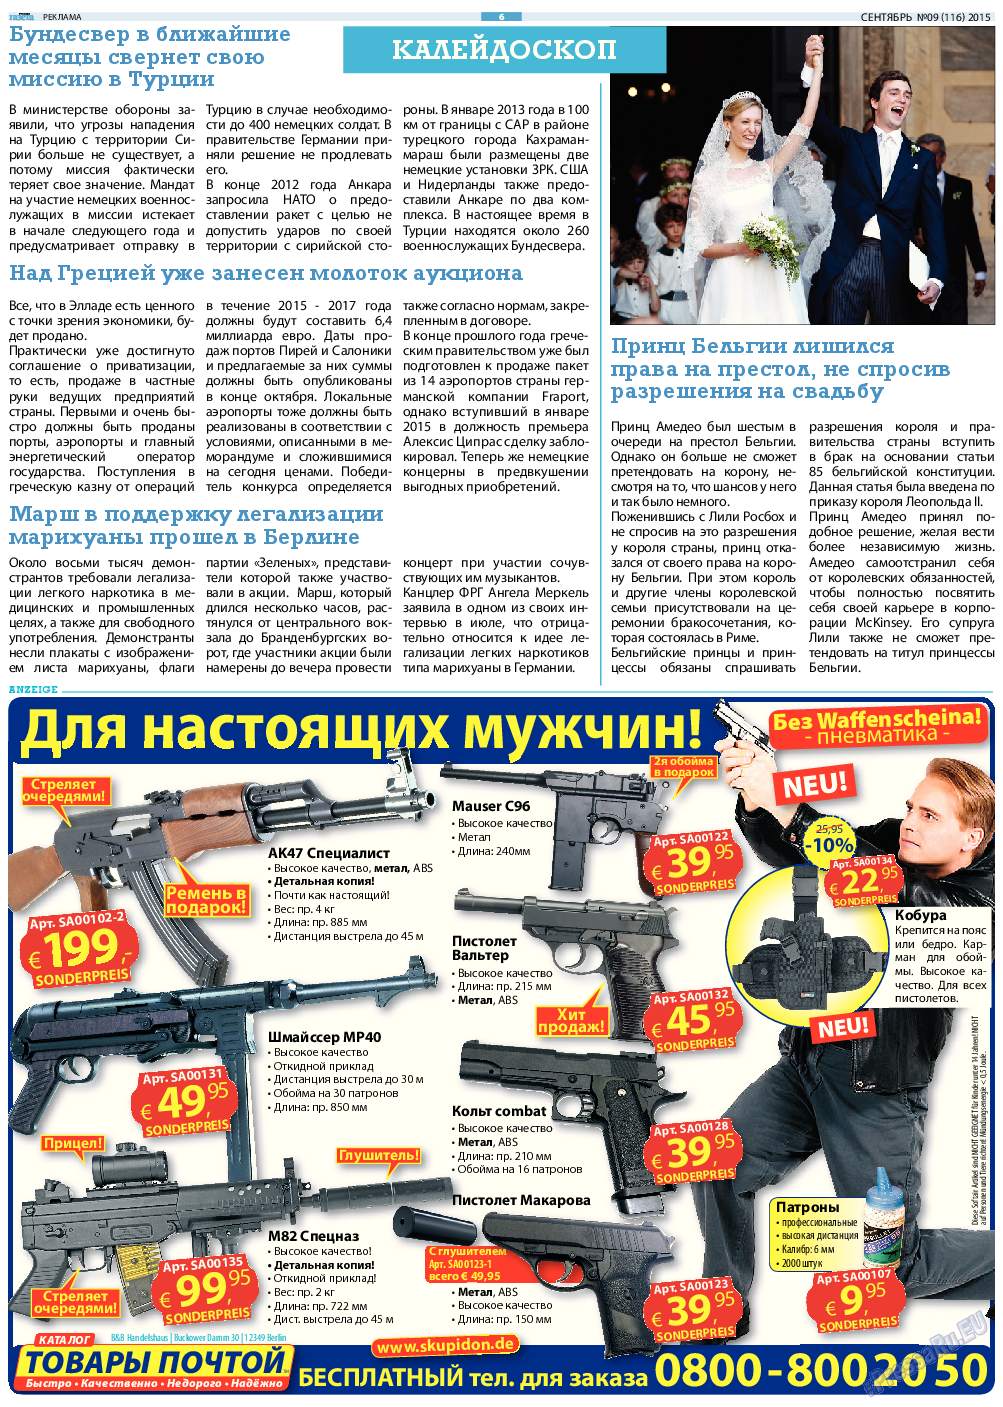 Русская Газета, газета. 2015 №9 стр.6